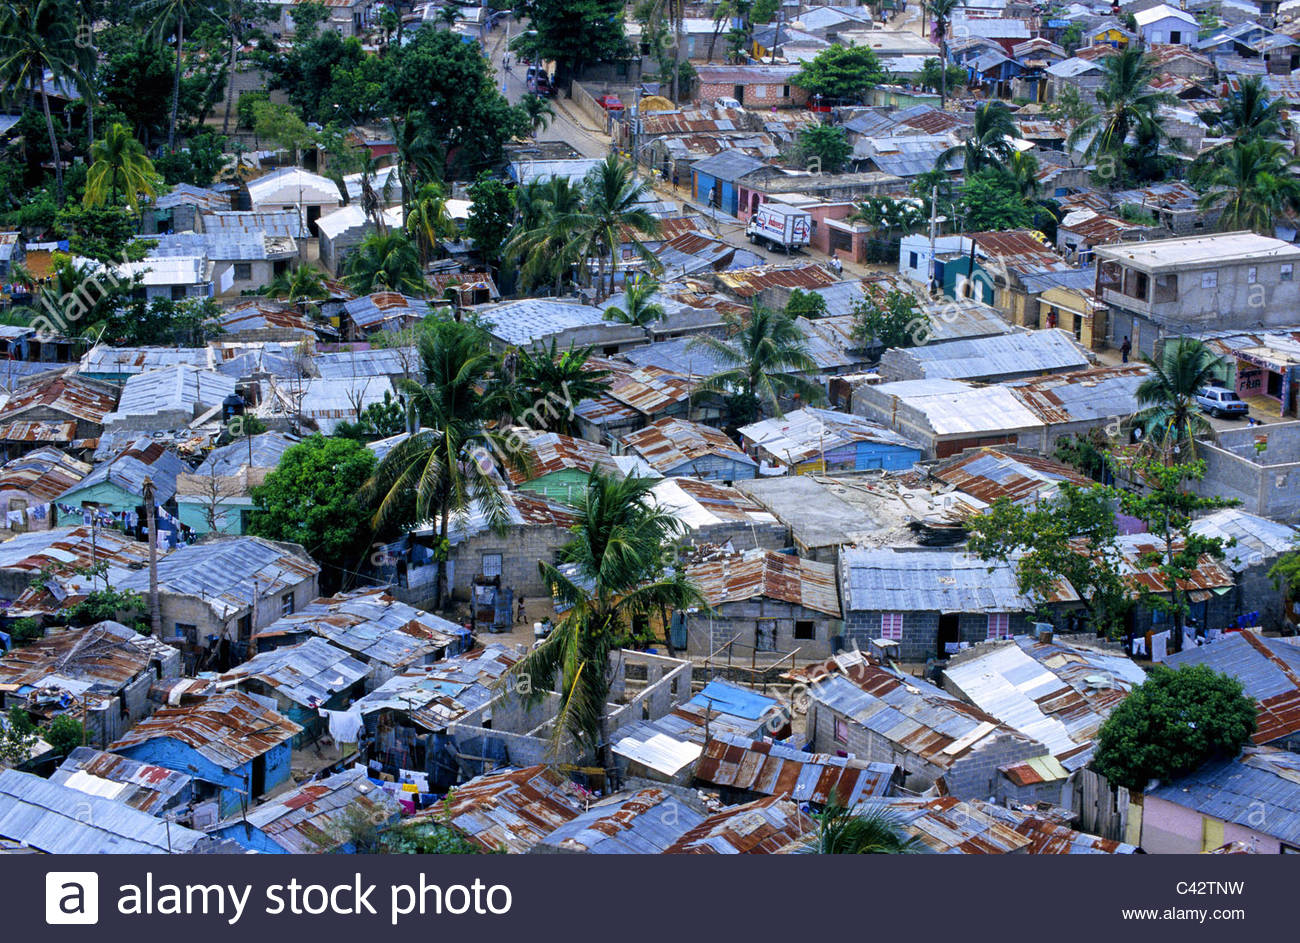 dominican-republic-santo-domingo-shanty-town-C42TNW.jpg